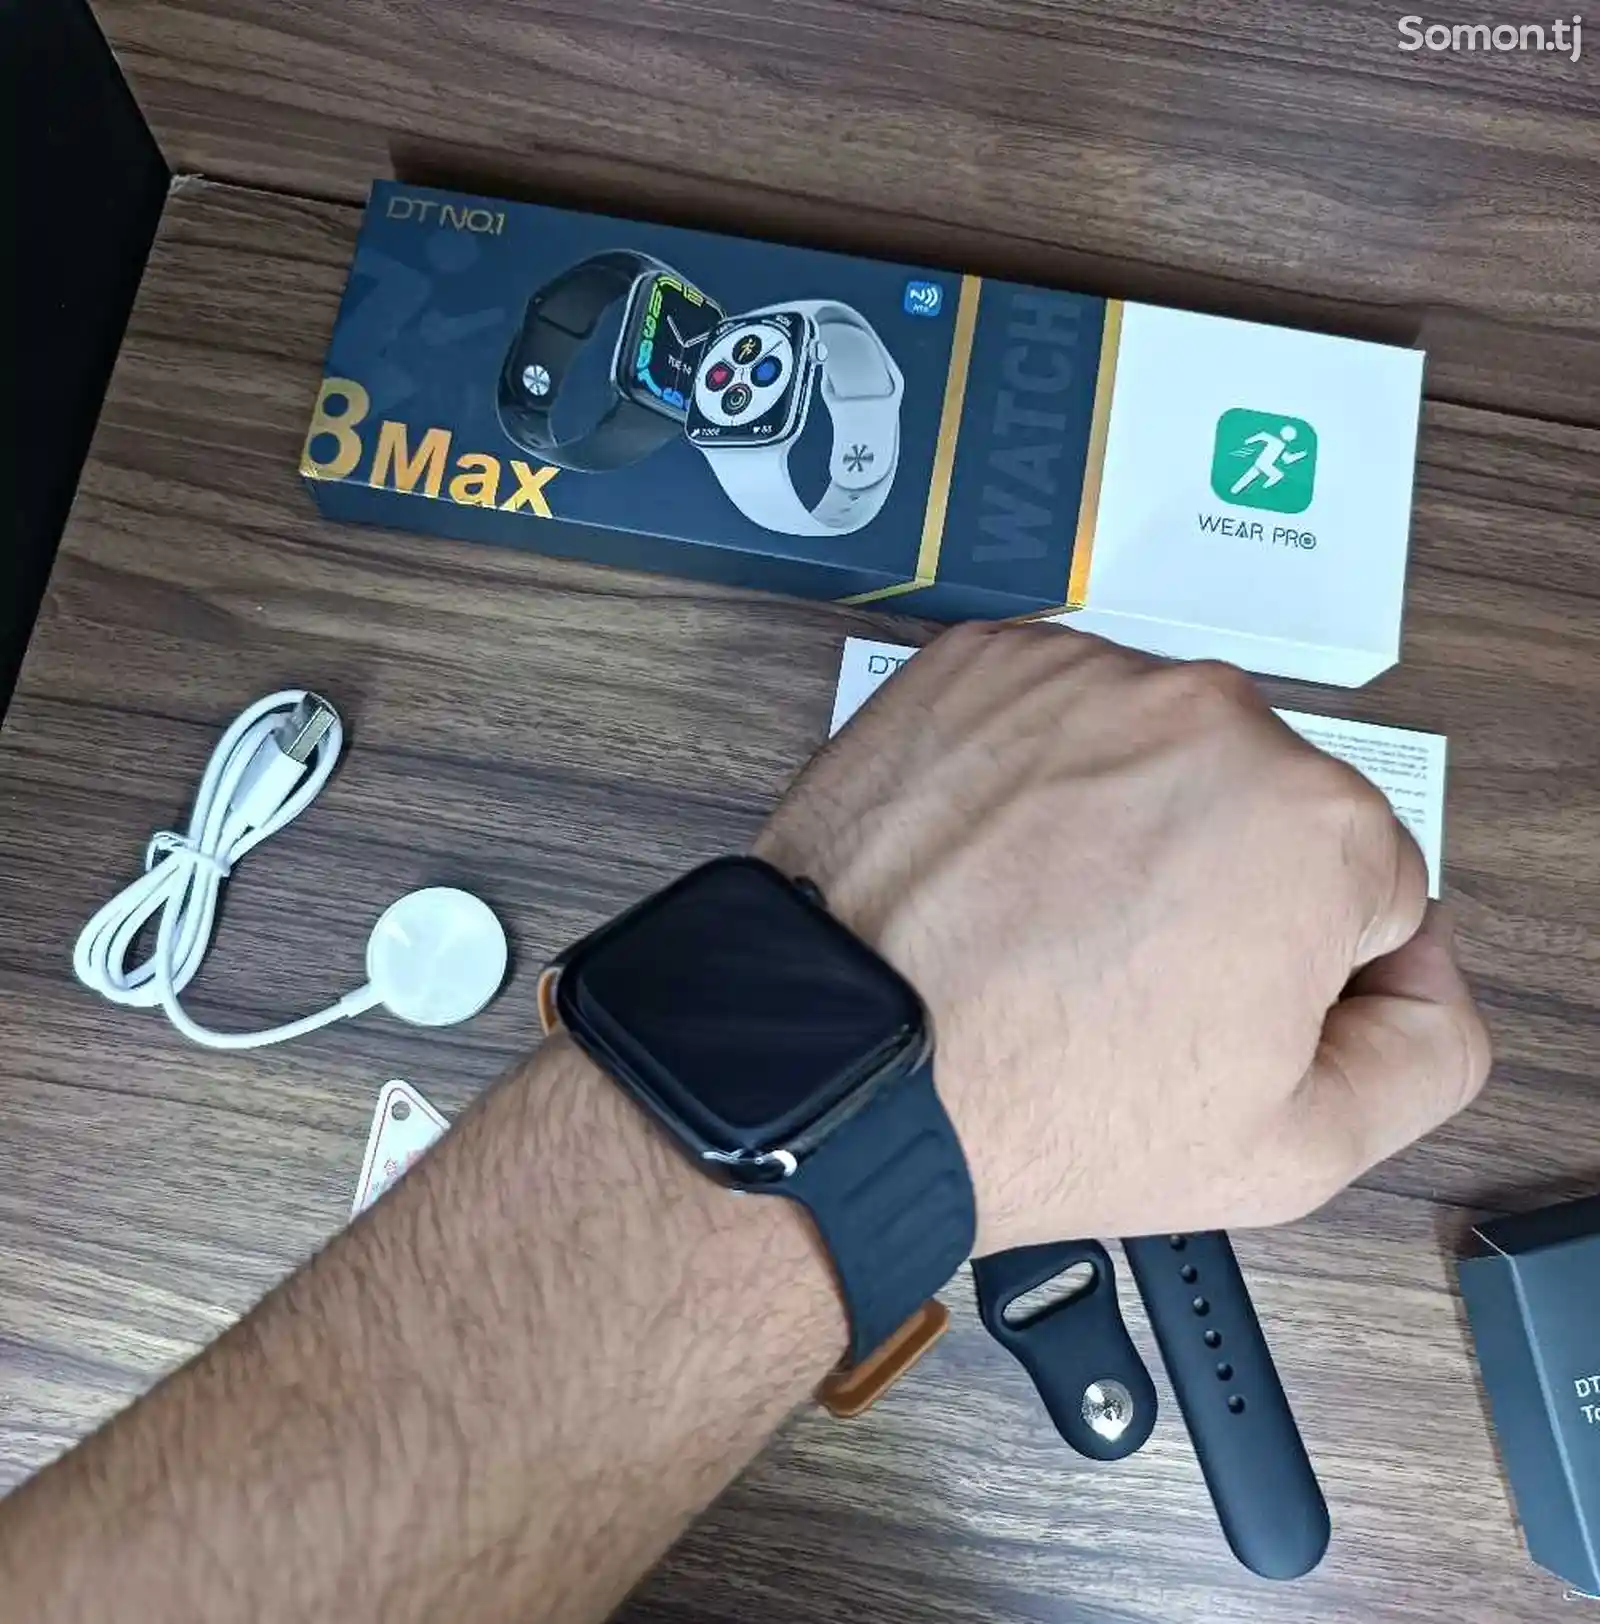 Apple Watch DT NO 8 max-1